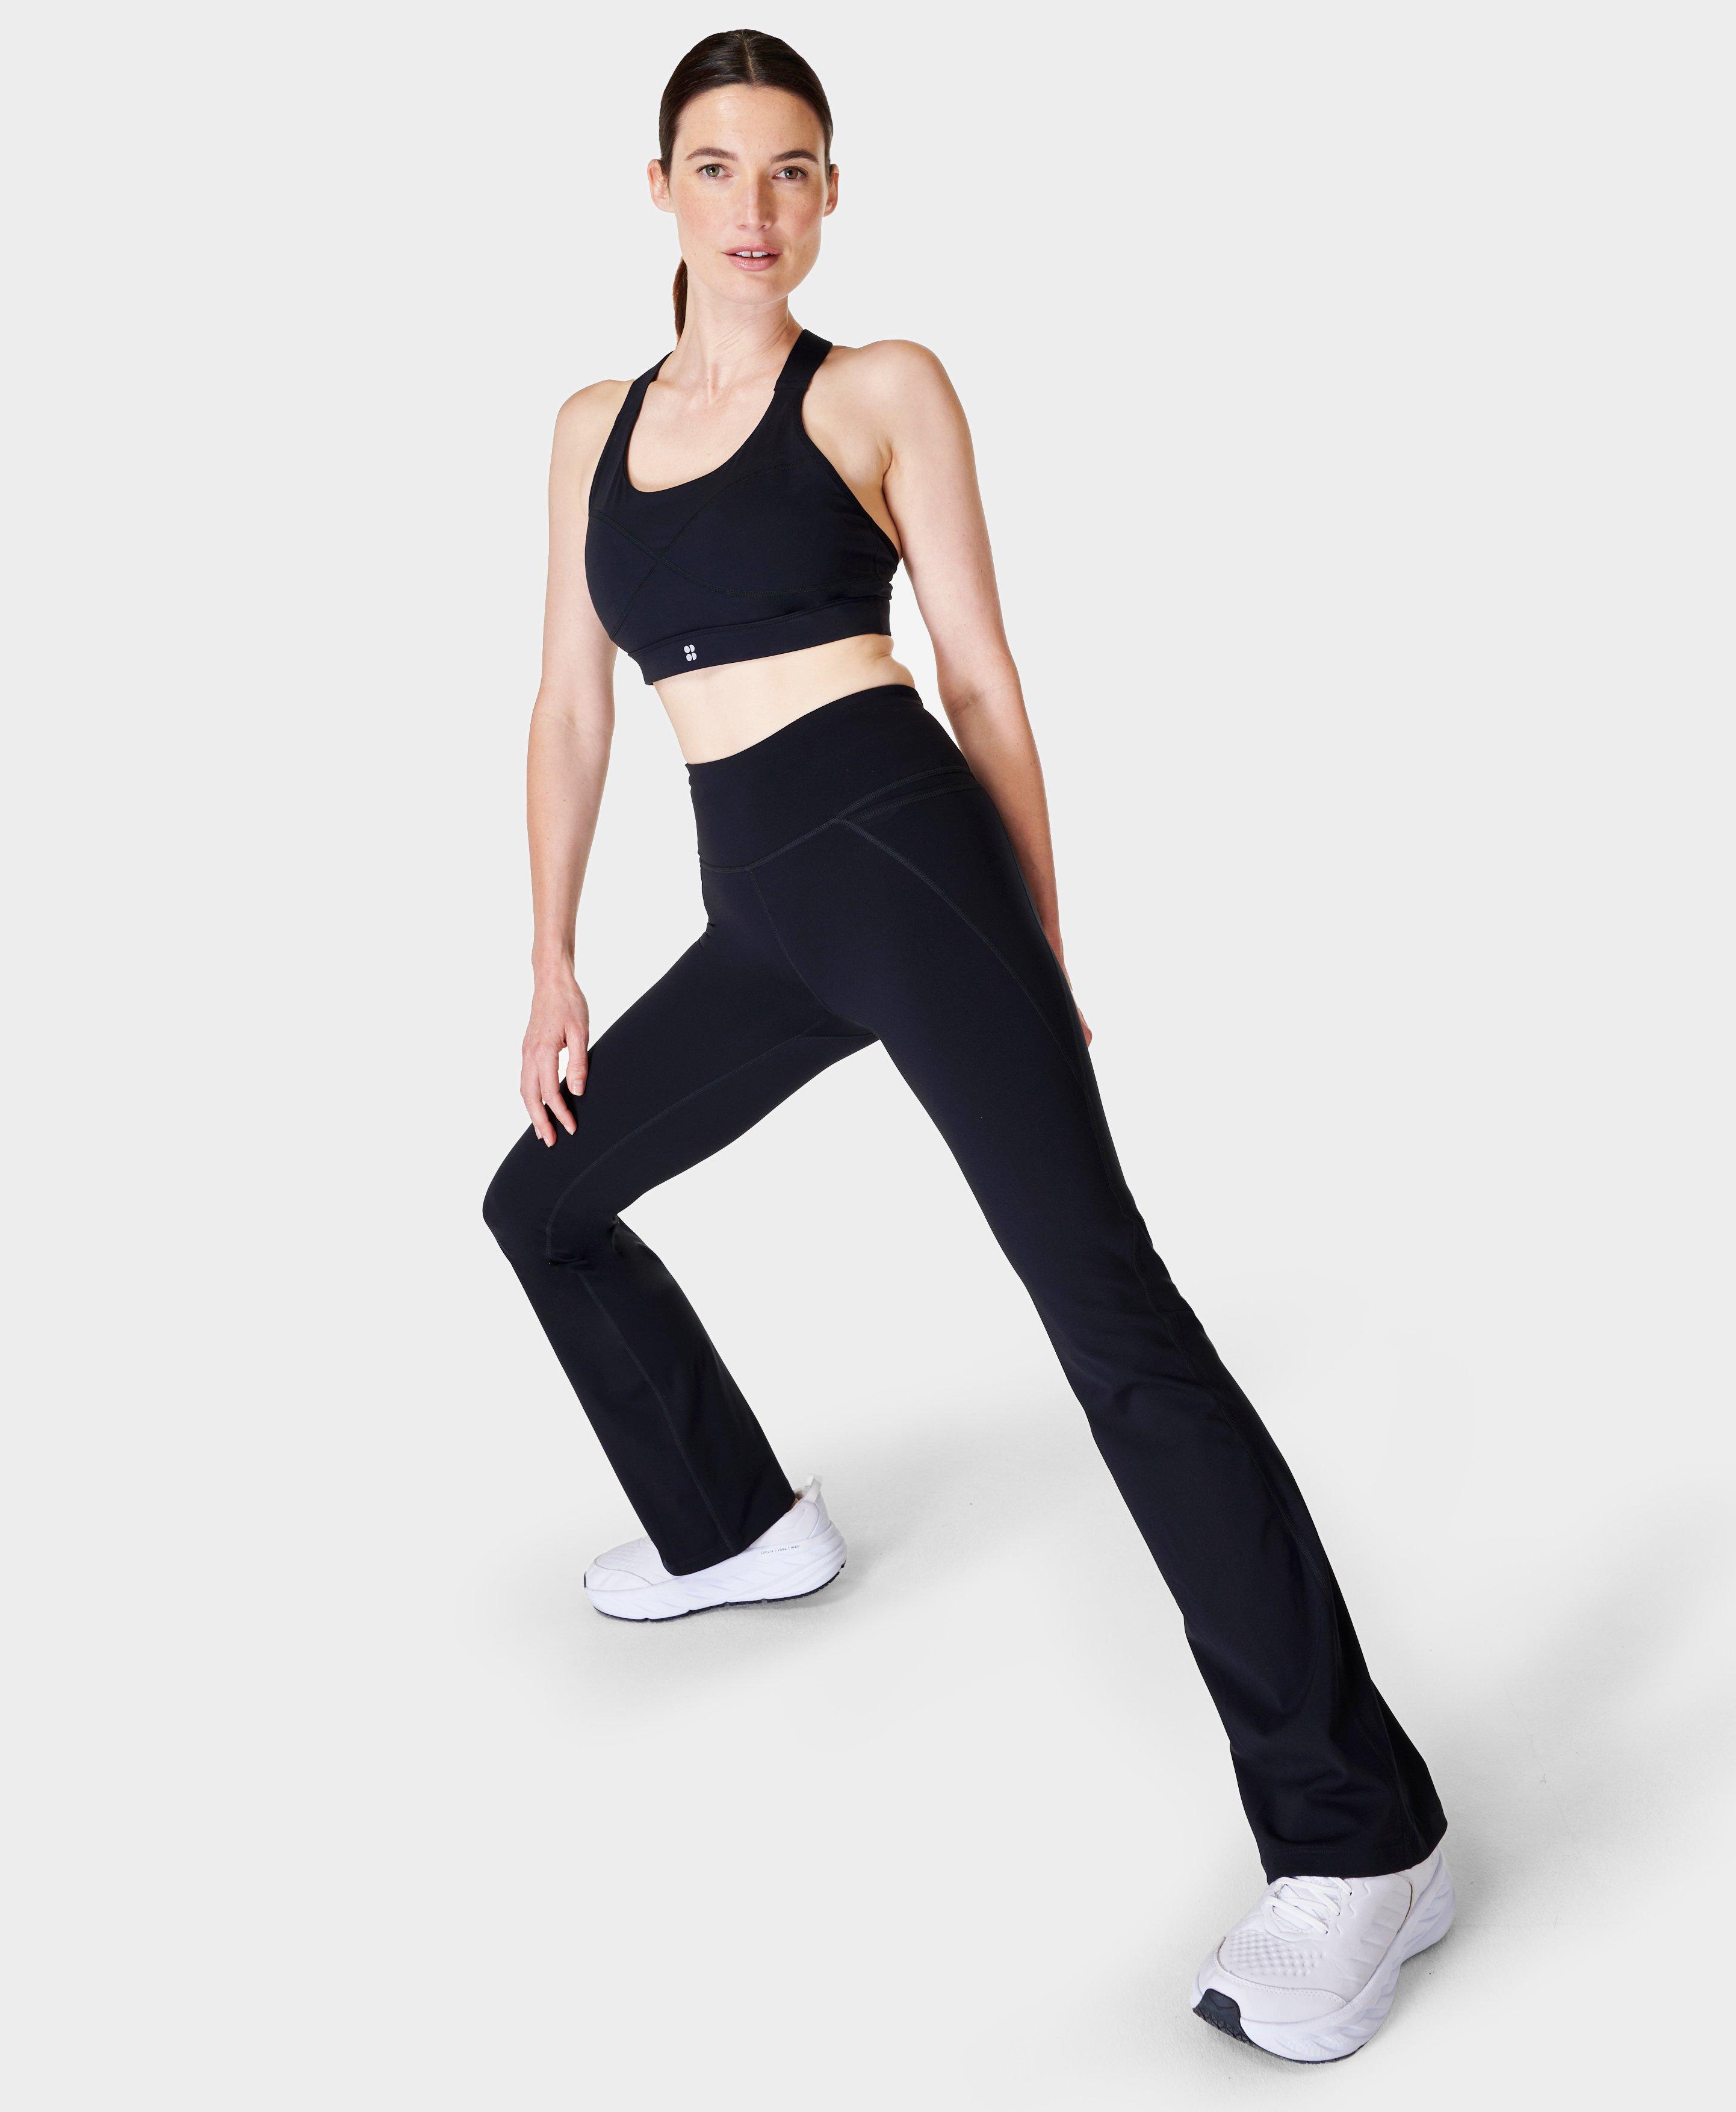 NWT Black Boot Cut Stretch Yoga Pants- Medium